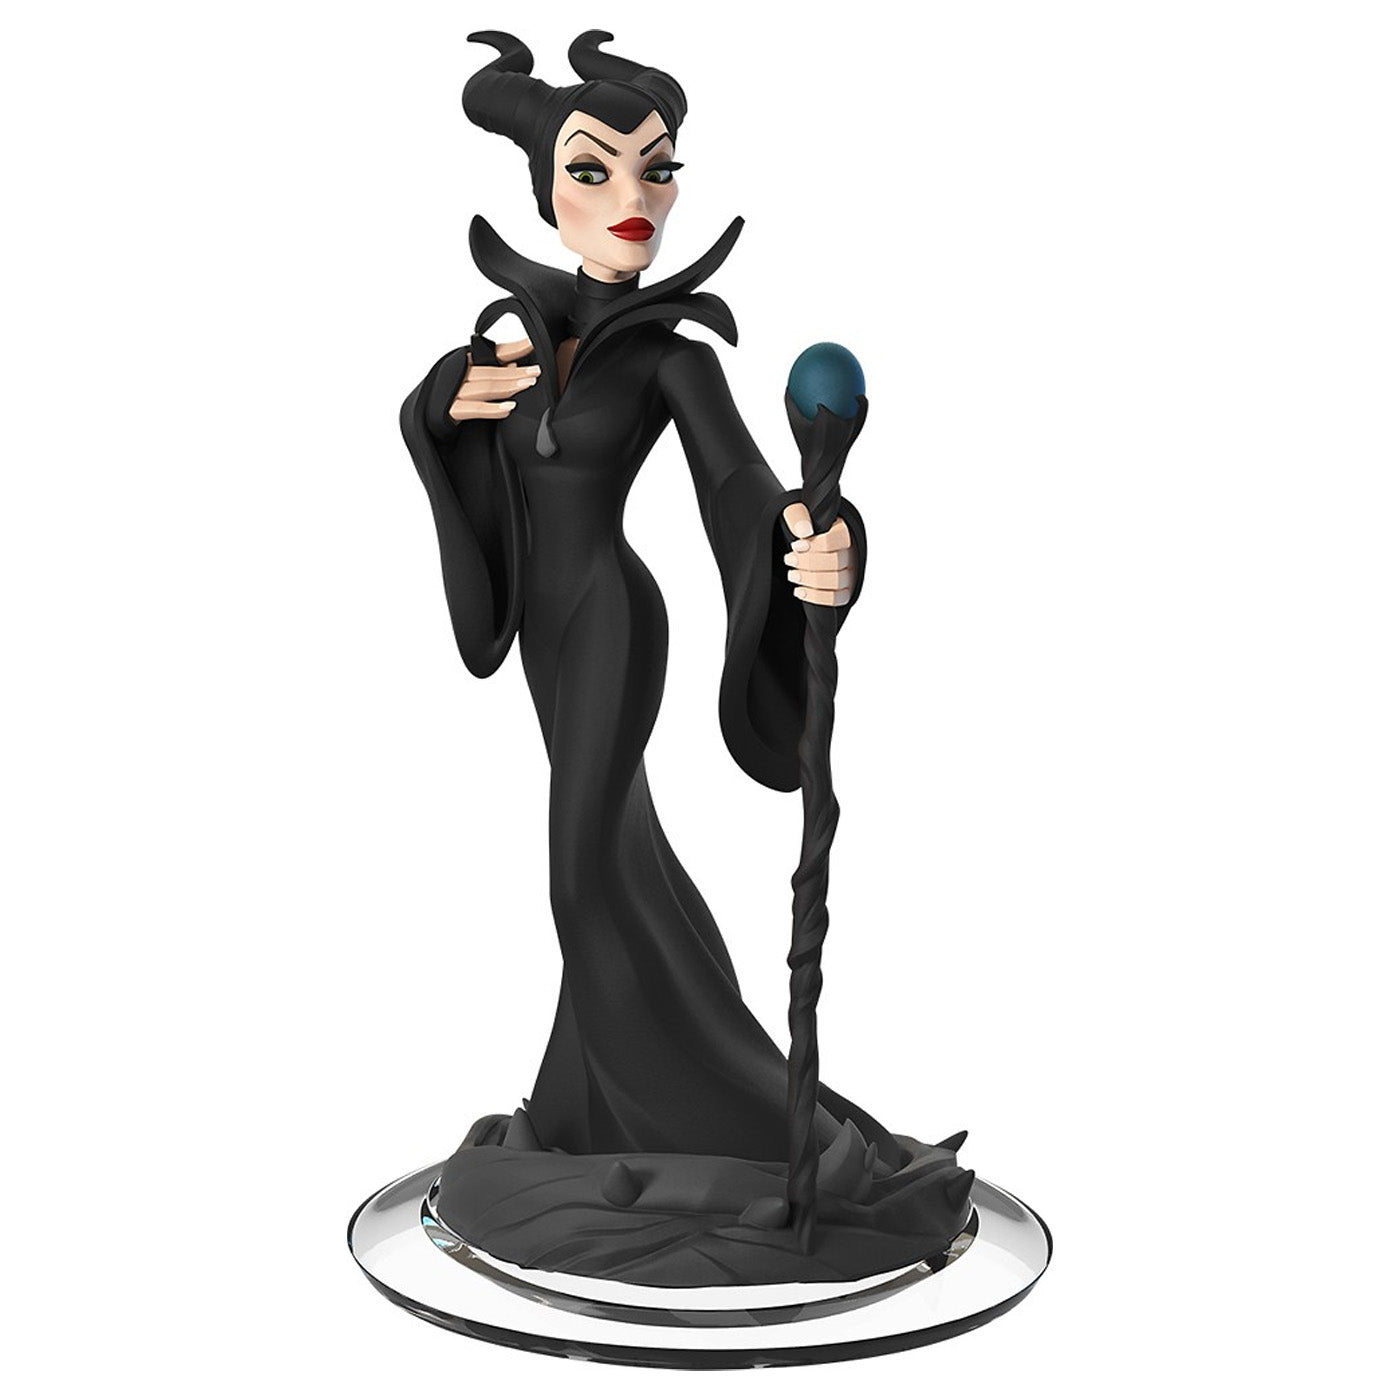 Disney Infinity 2.0 Character: Maleficent